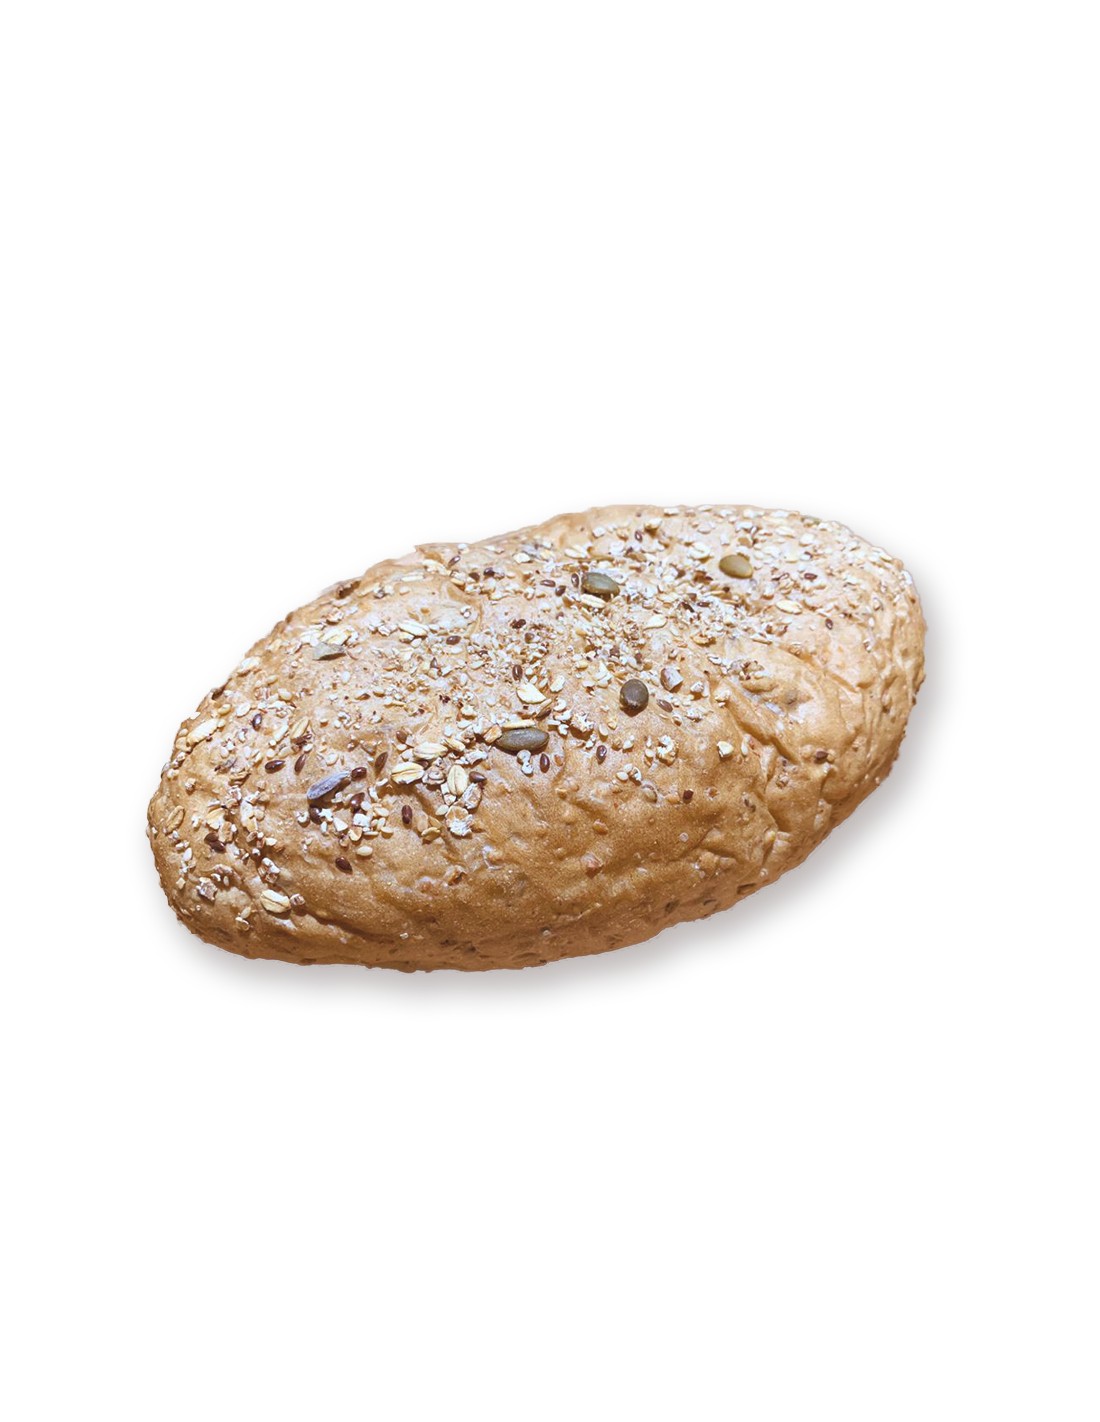 [Preorder] Multigrain Loaf (450g)